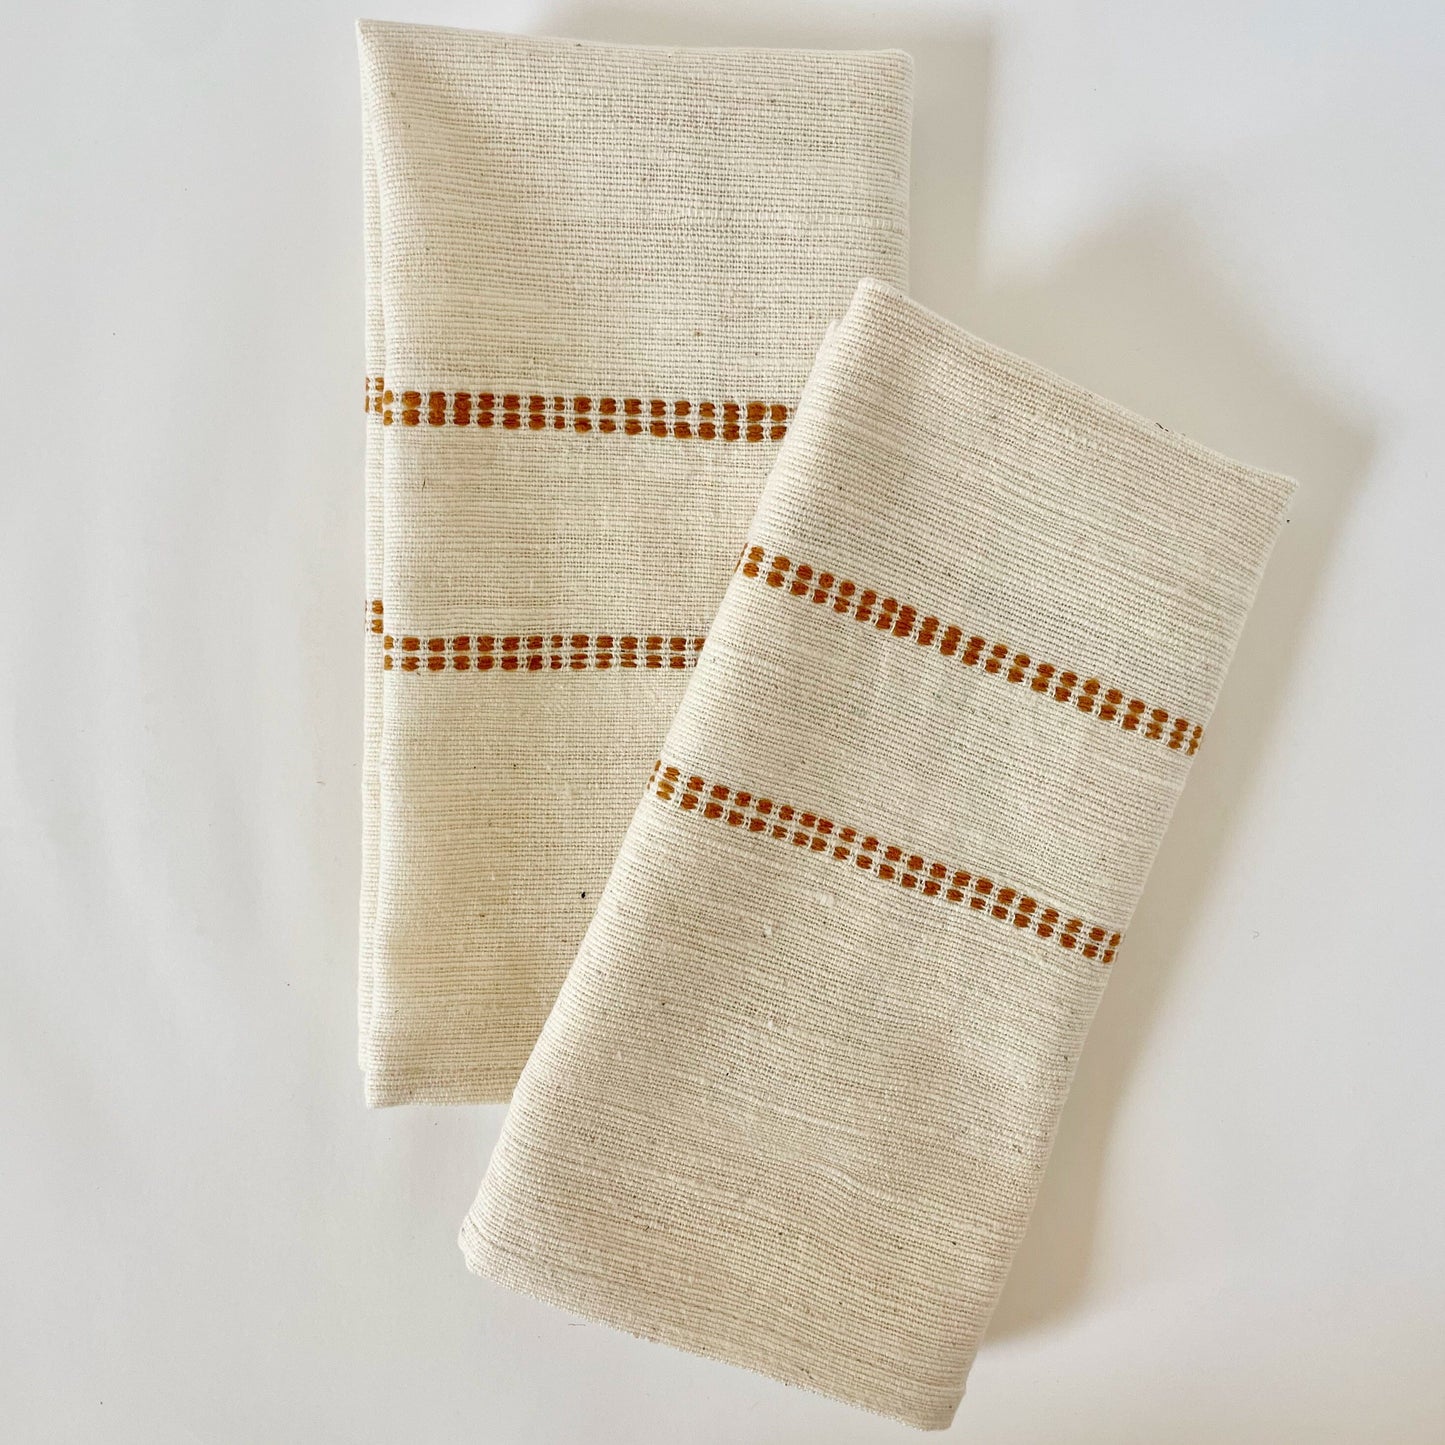 Chamo handwoven Ethiopian cotton napkins Napkins sabahar Bronze 